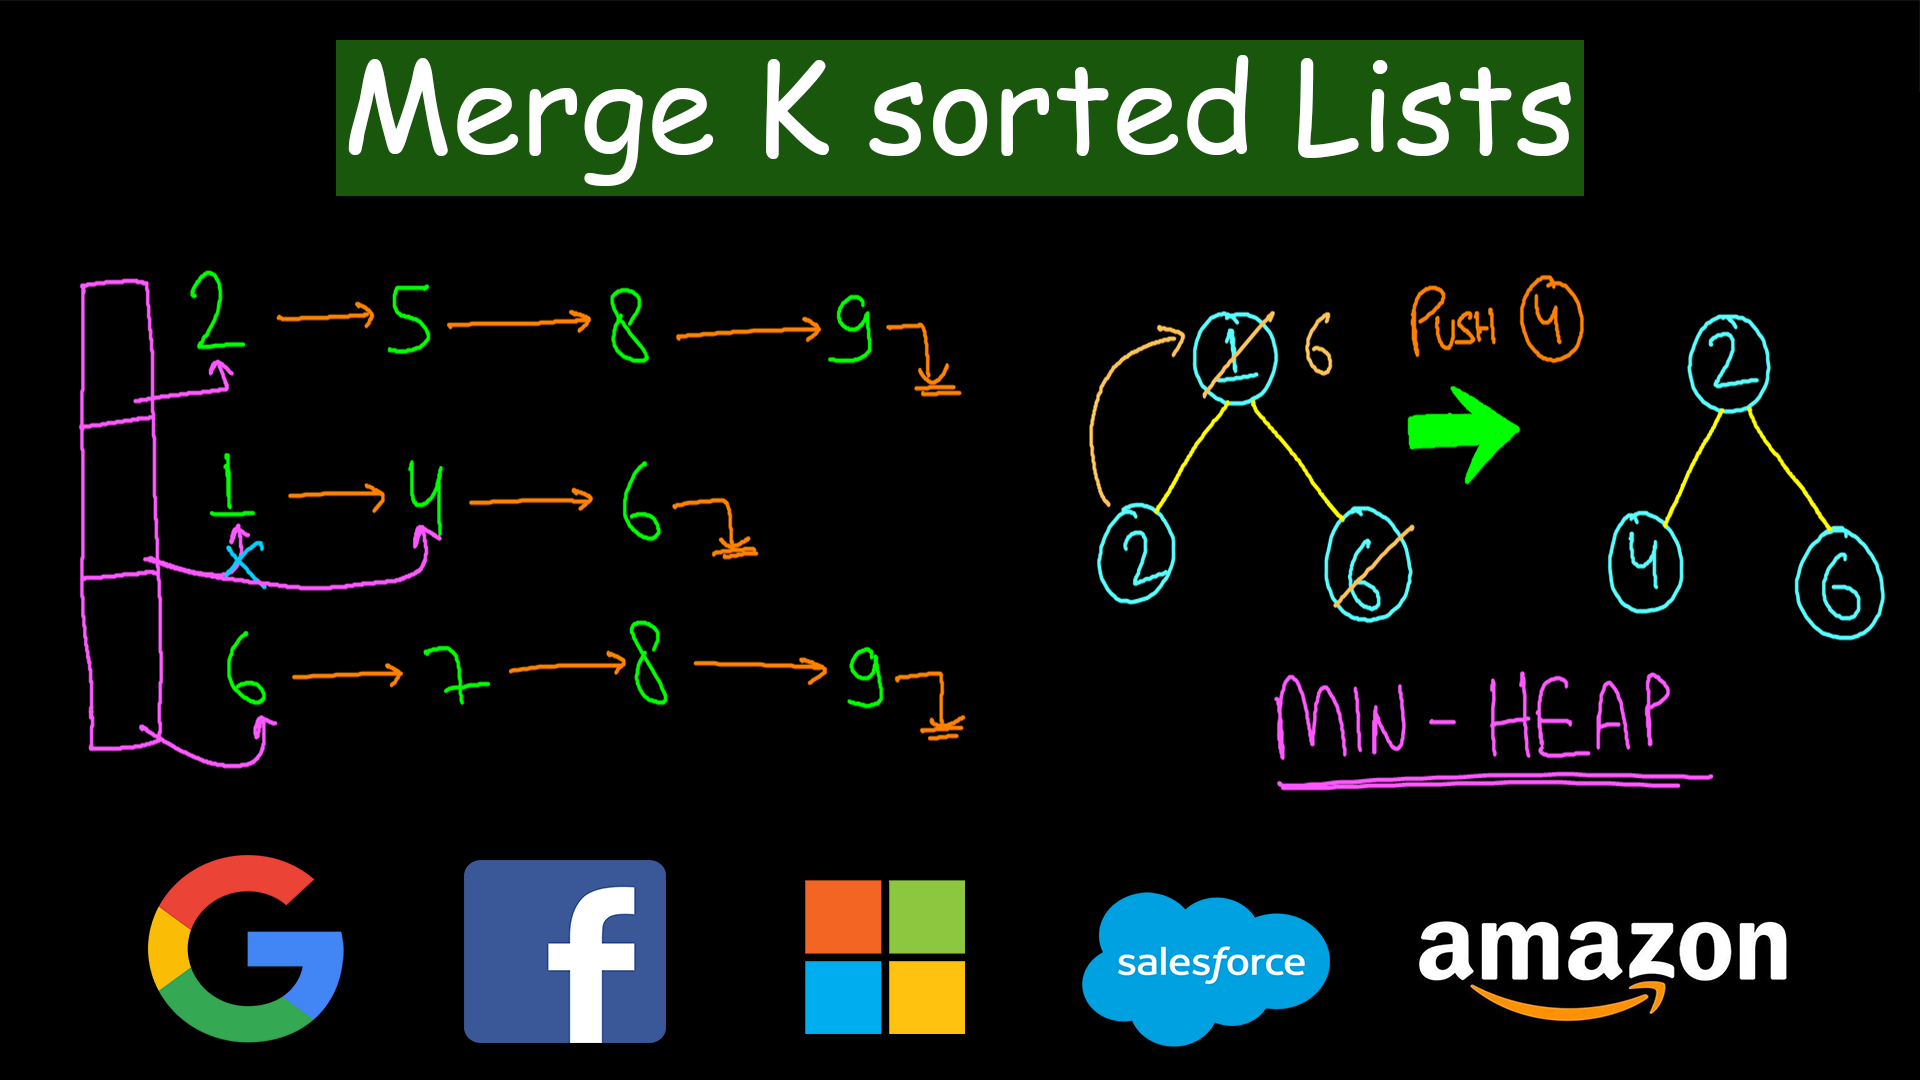 Merge lists list. 21. Merge two sorted lists с№. LEETCODE C#. Класс SORTEDLIST.